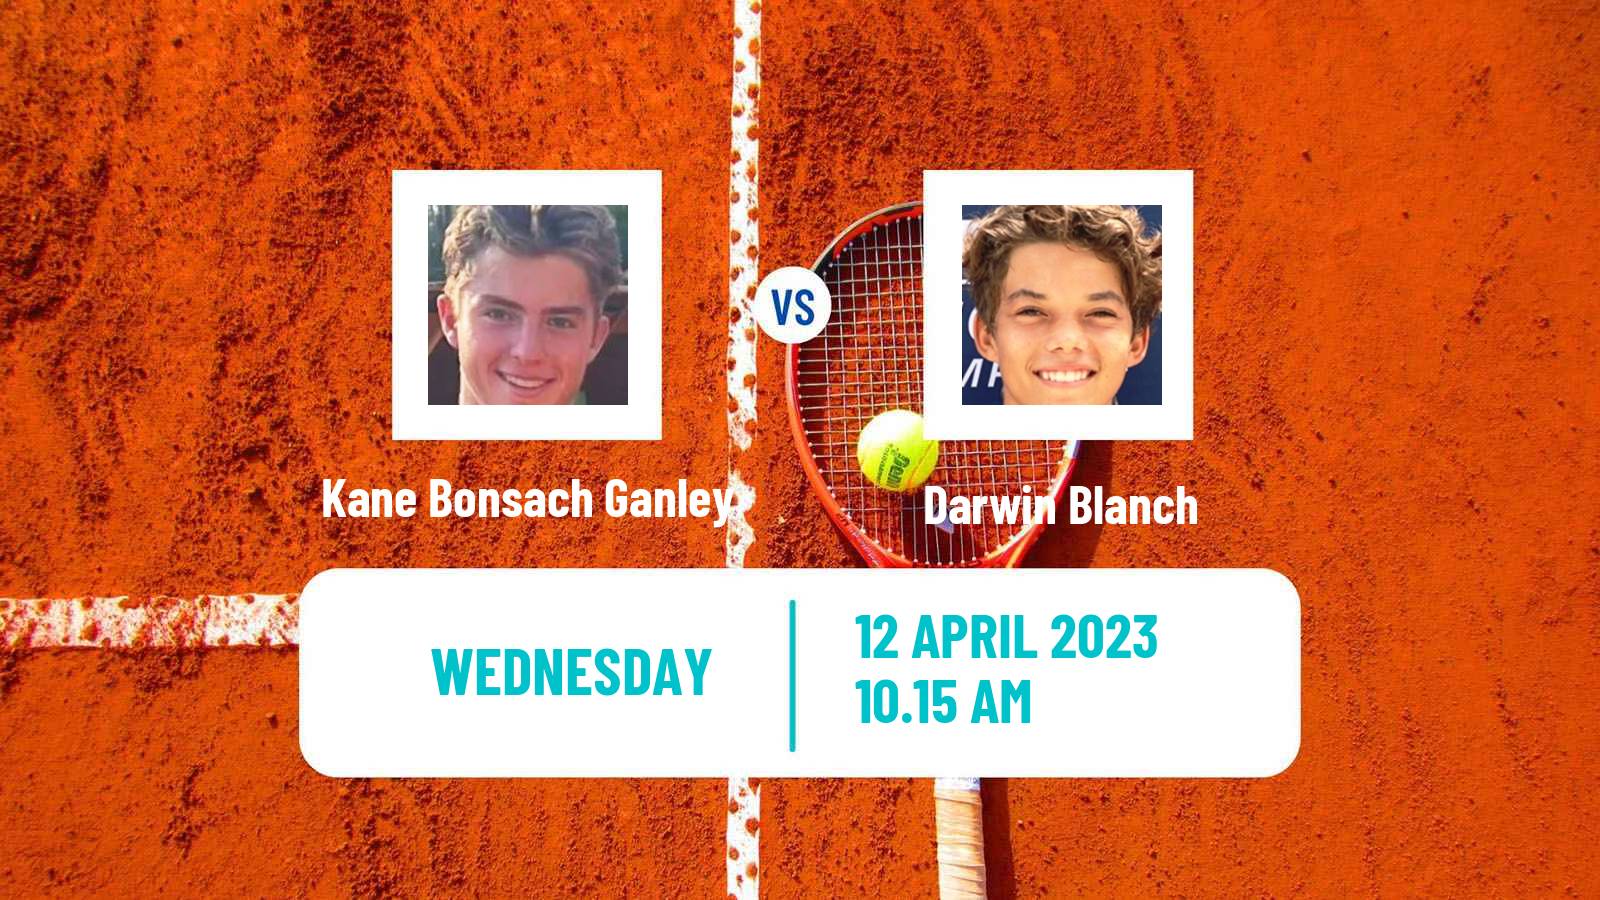 Tennis ITF Tournaments Kane Bonsach Ganley - Darwin Blanch